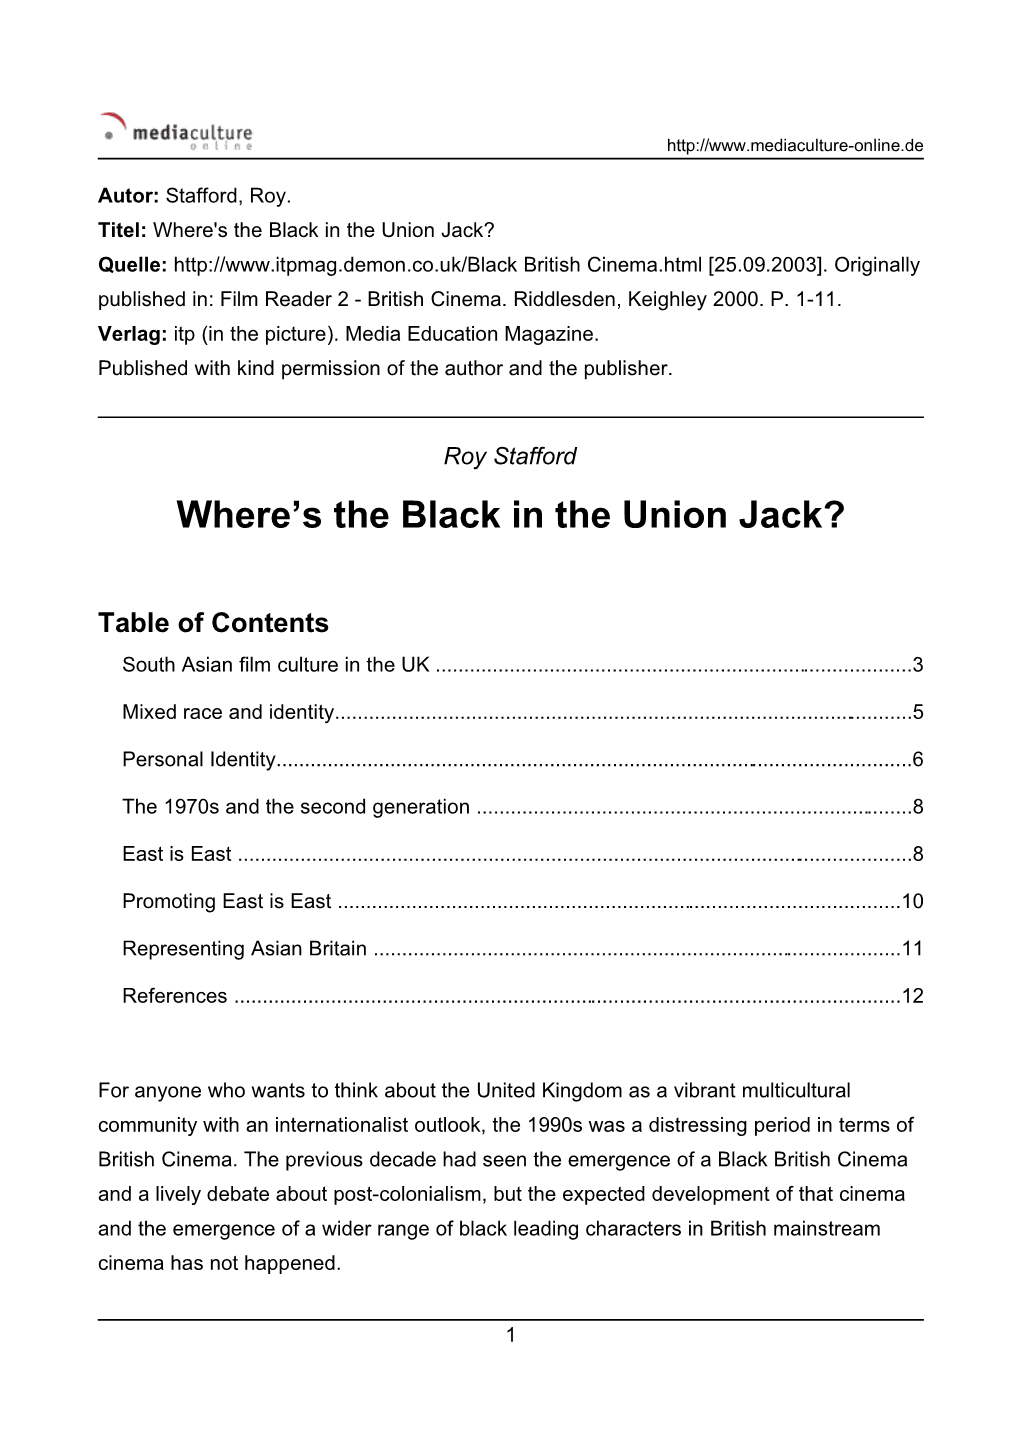 Where's the Black in the Union Jack? Quelle: British Cinema.Html [25.09.2003]